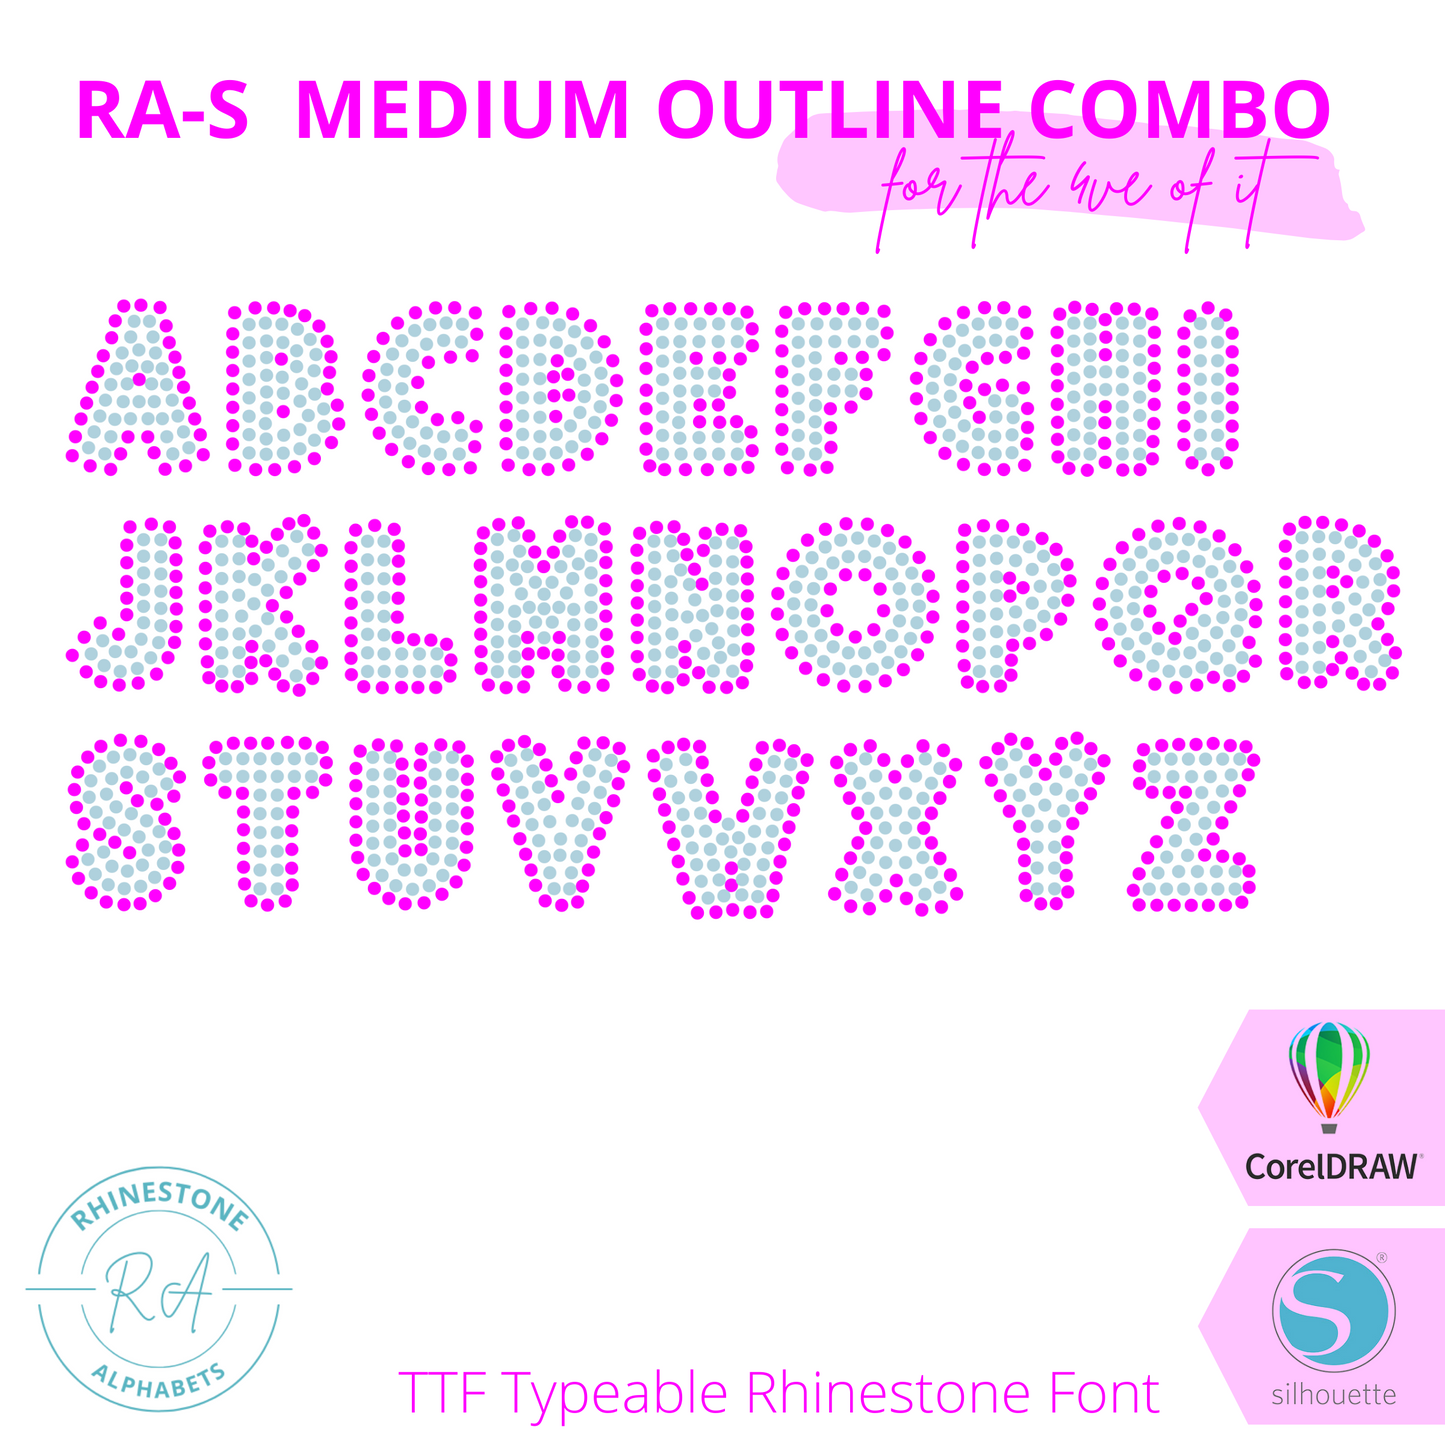 RA-S Medium Outline Combo - RhinestoneAlphabets